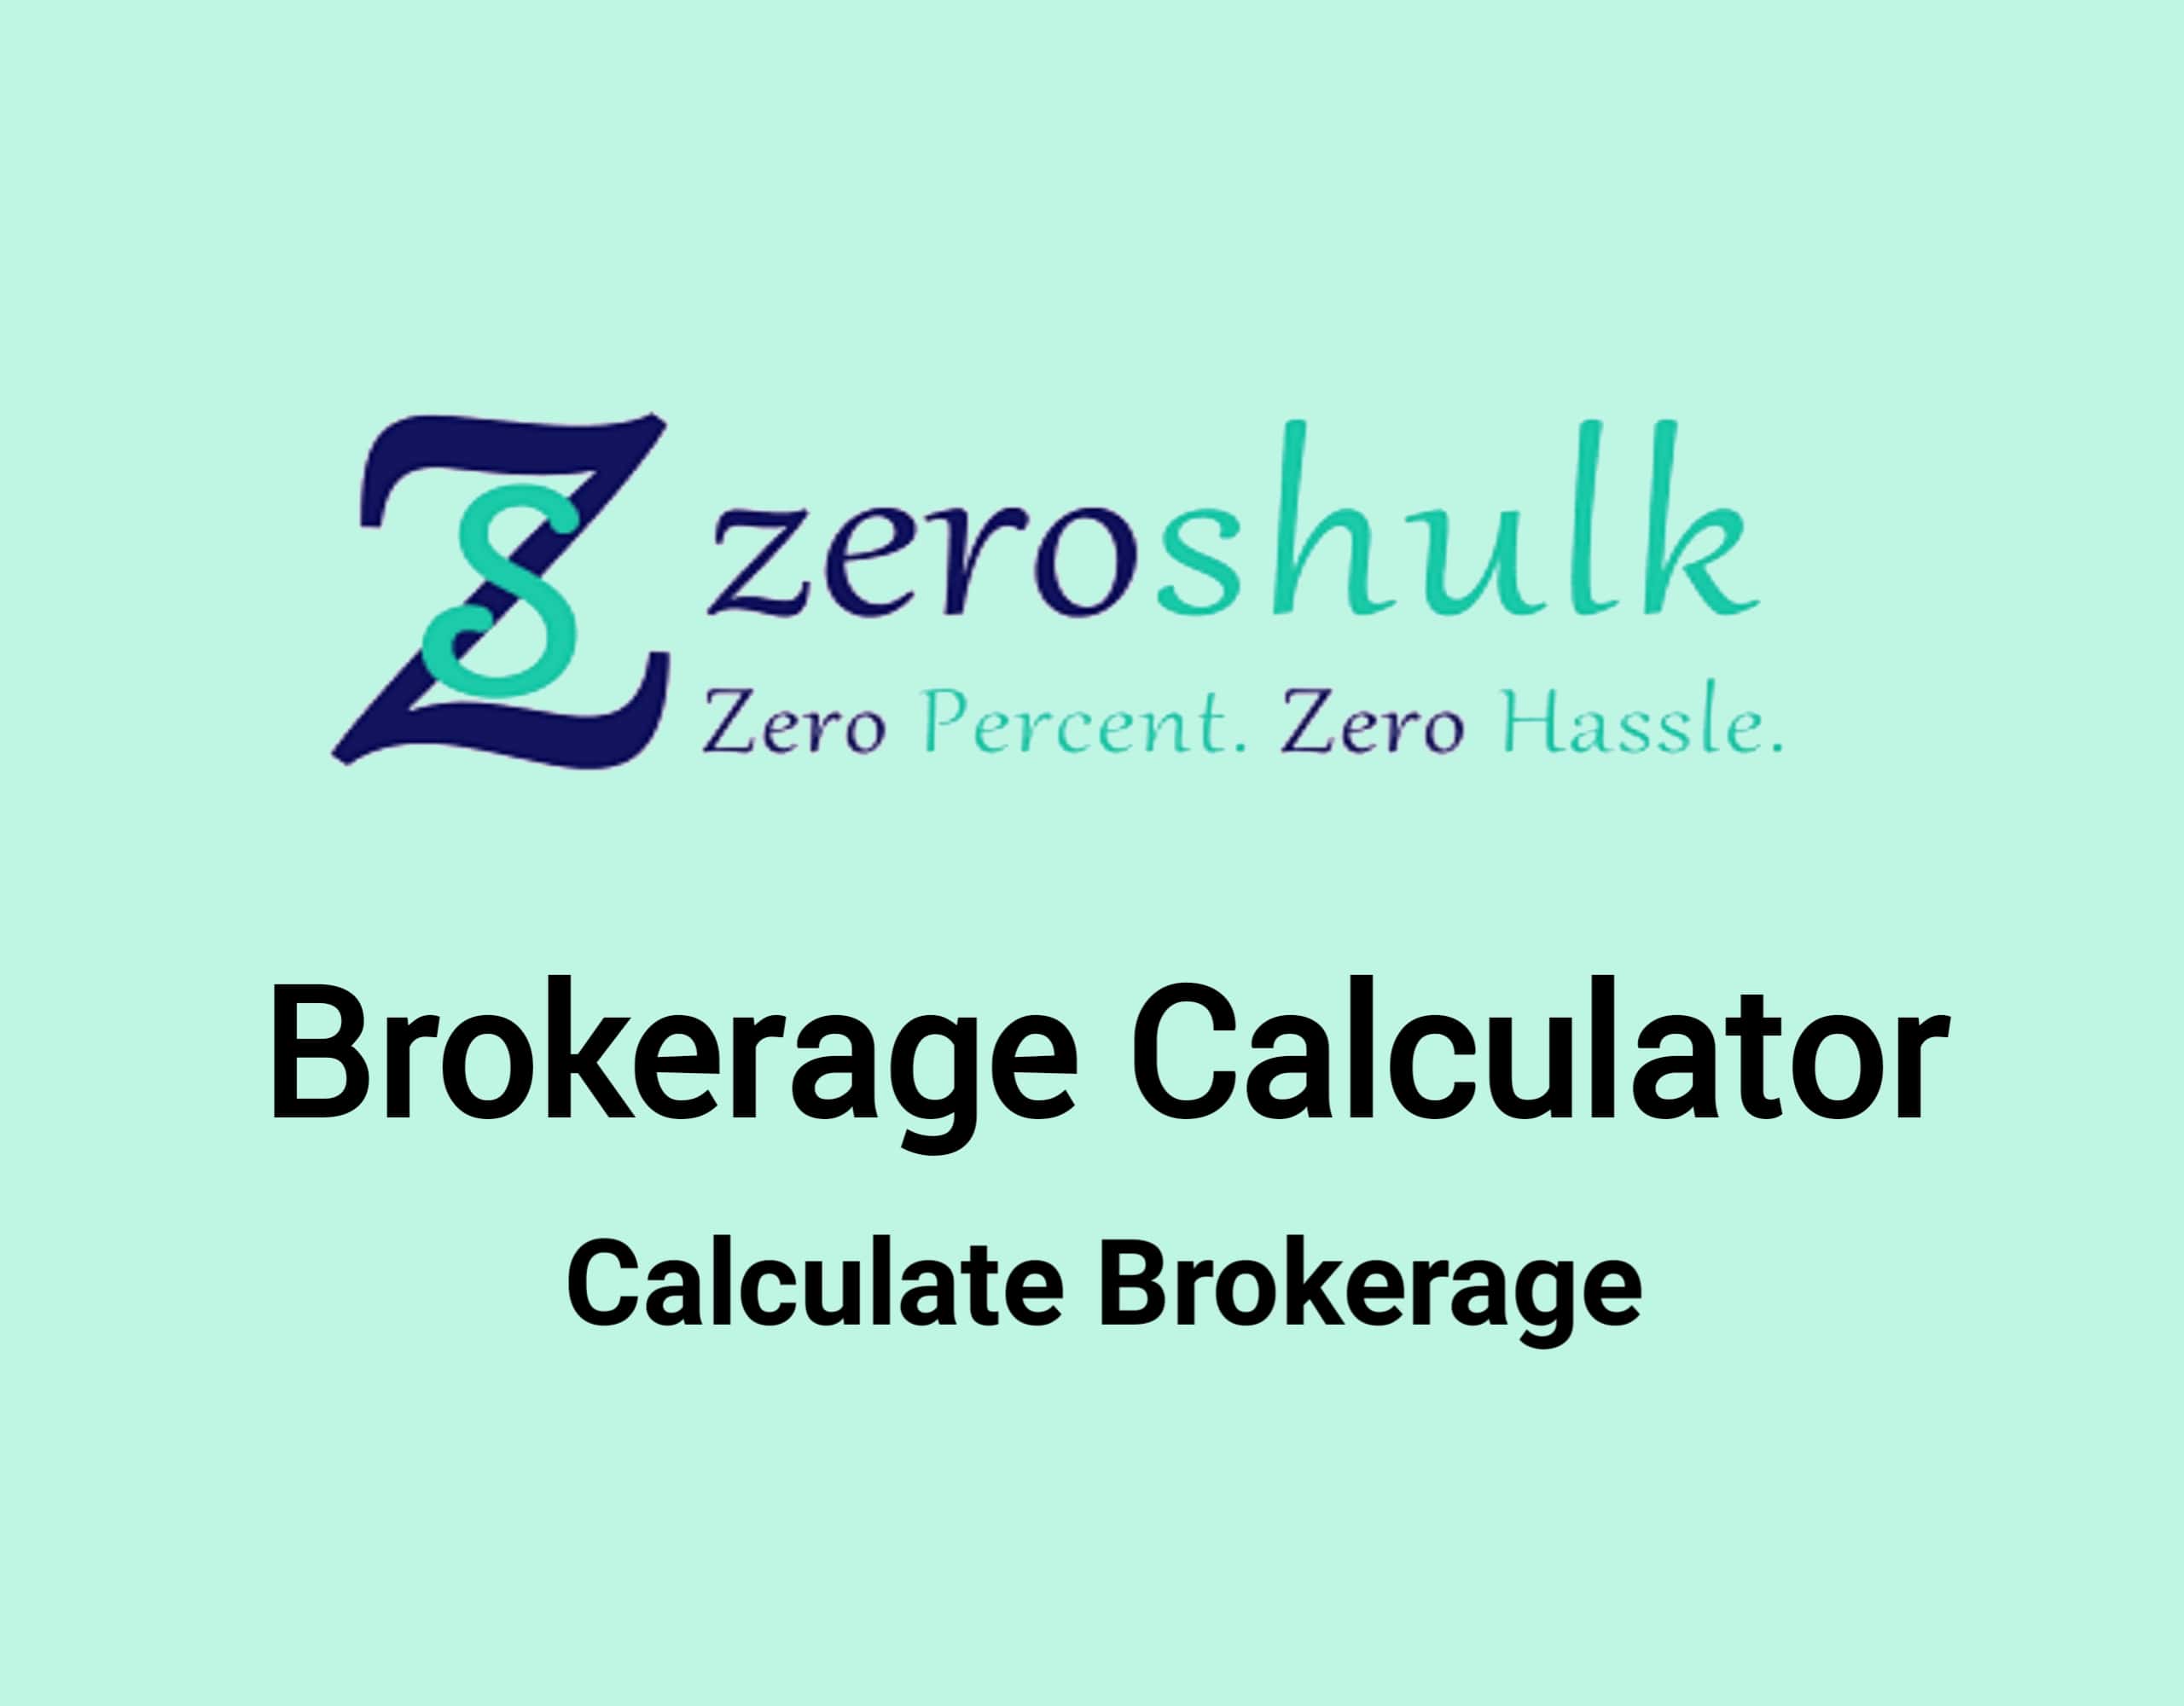 Zeroshulk Brokerage Calculator